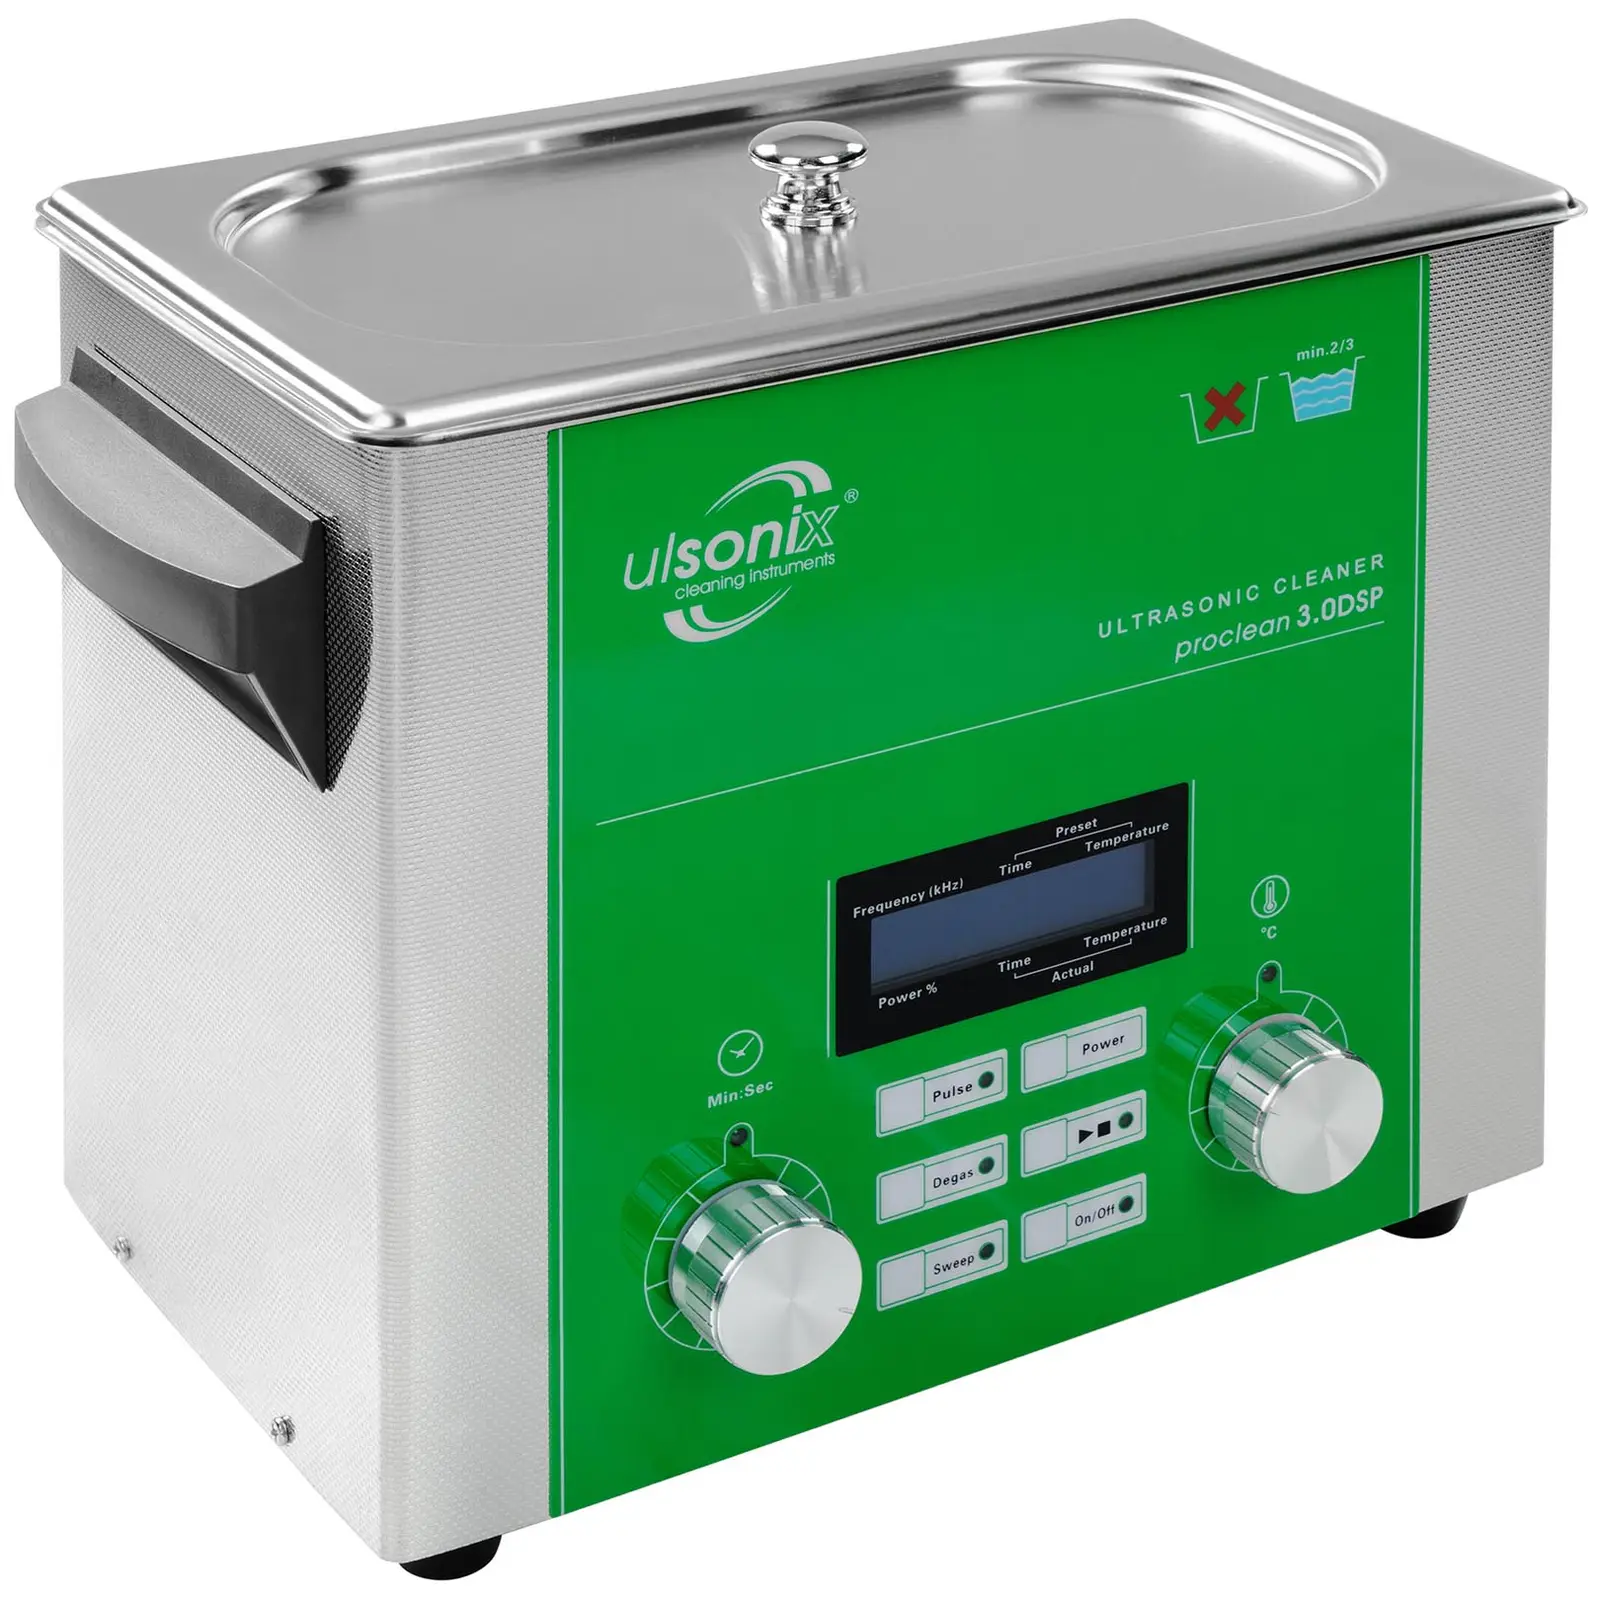 Nettoyeur à ultrasons - 3 litres - Degas - Sweep - Puls